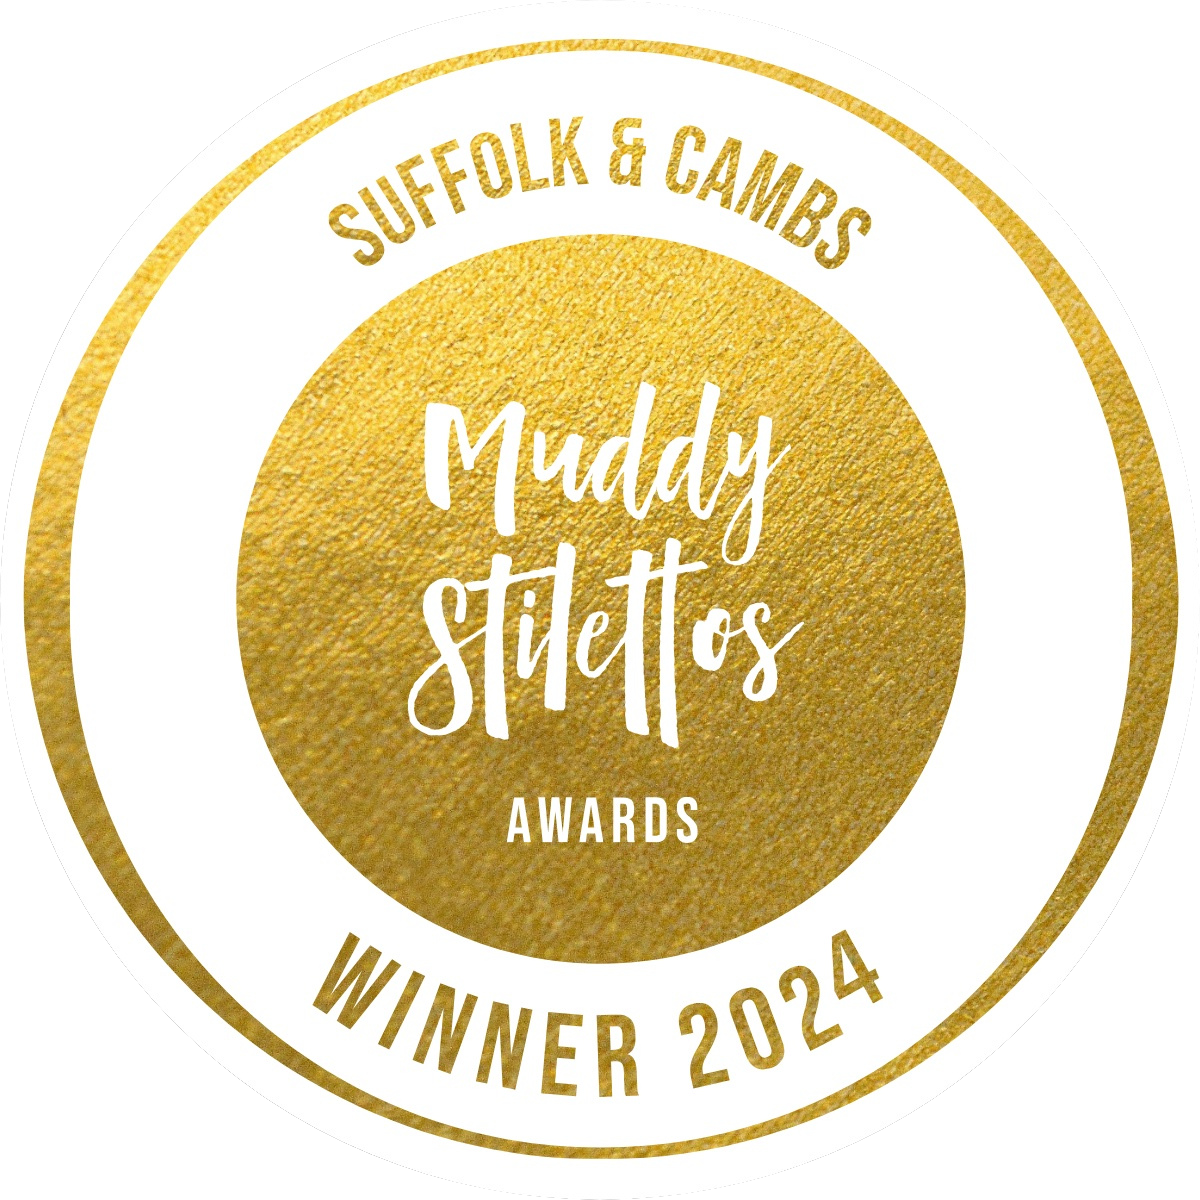 Muddy Stilettos Award Winner